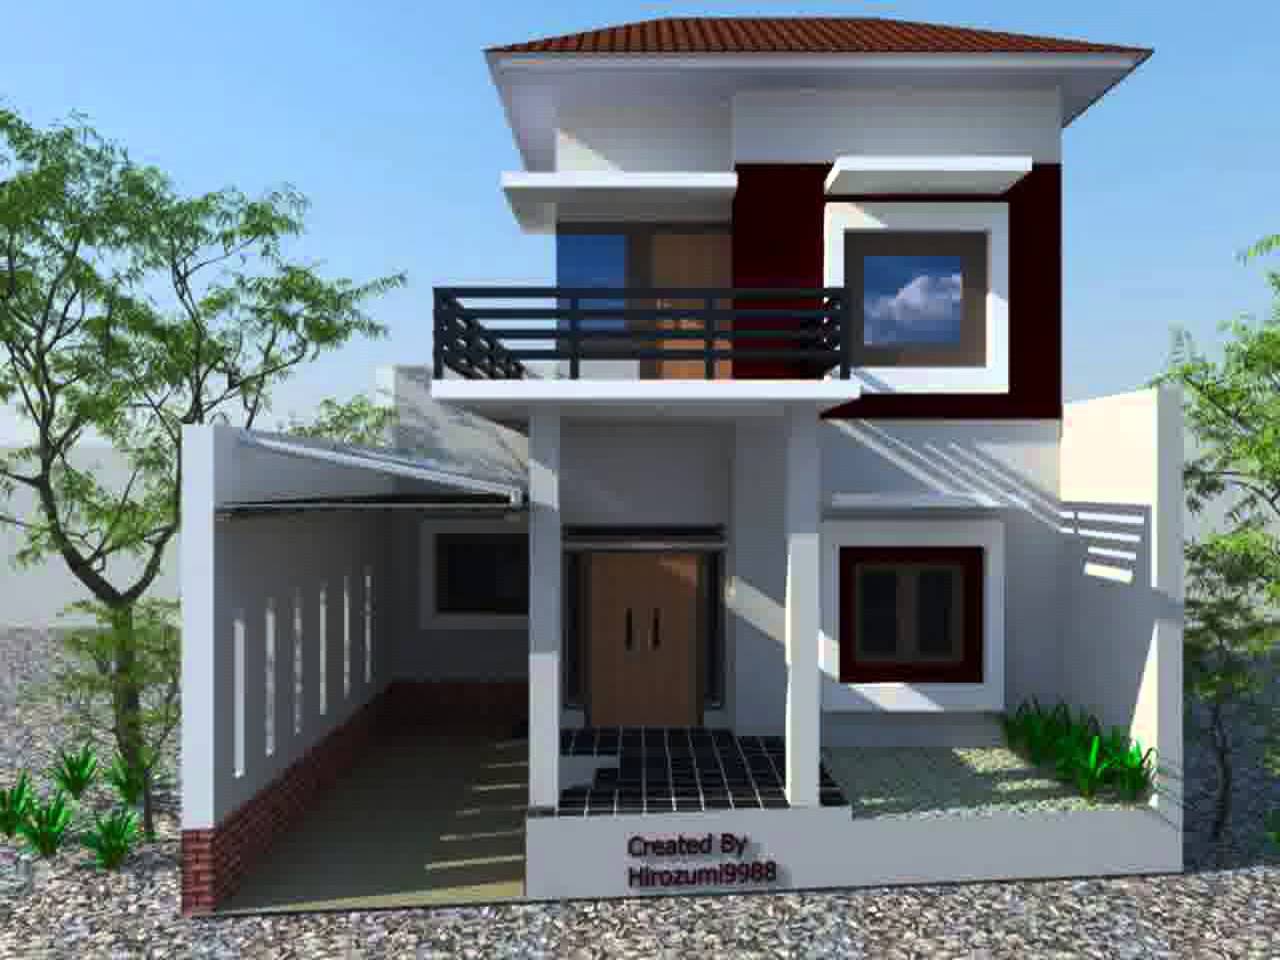 Rumah Minimalis 6 X 12 Dshdesign4kinfo